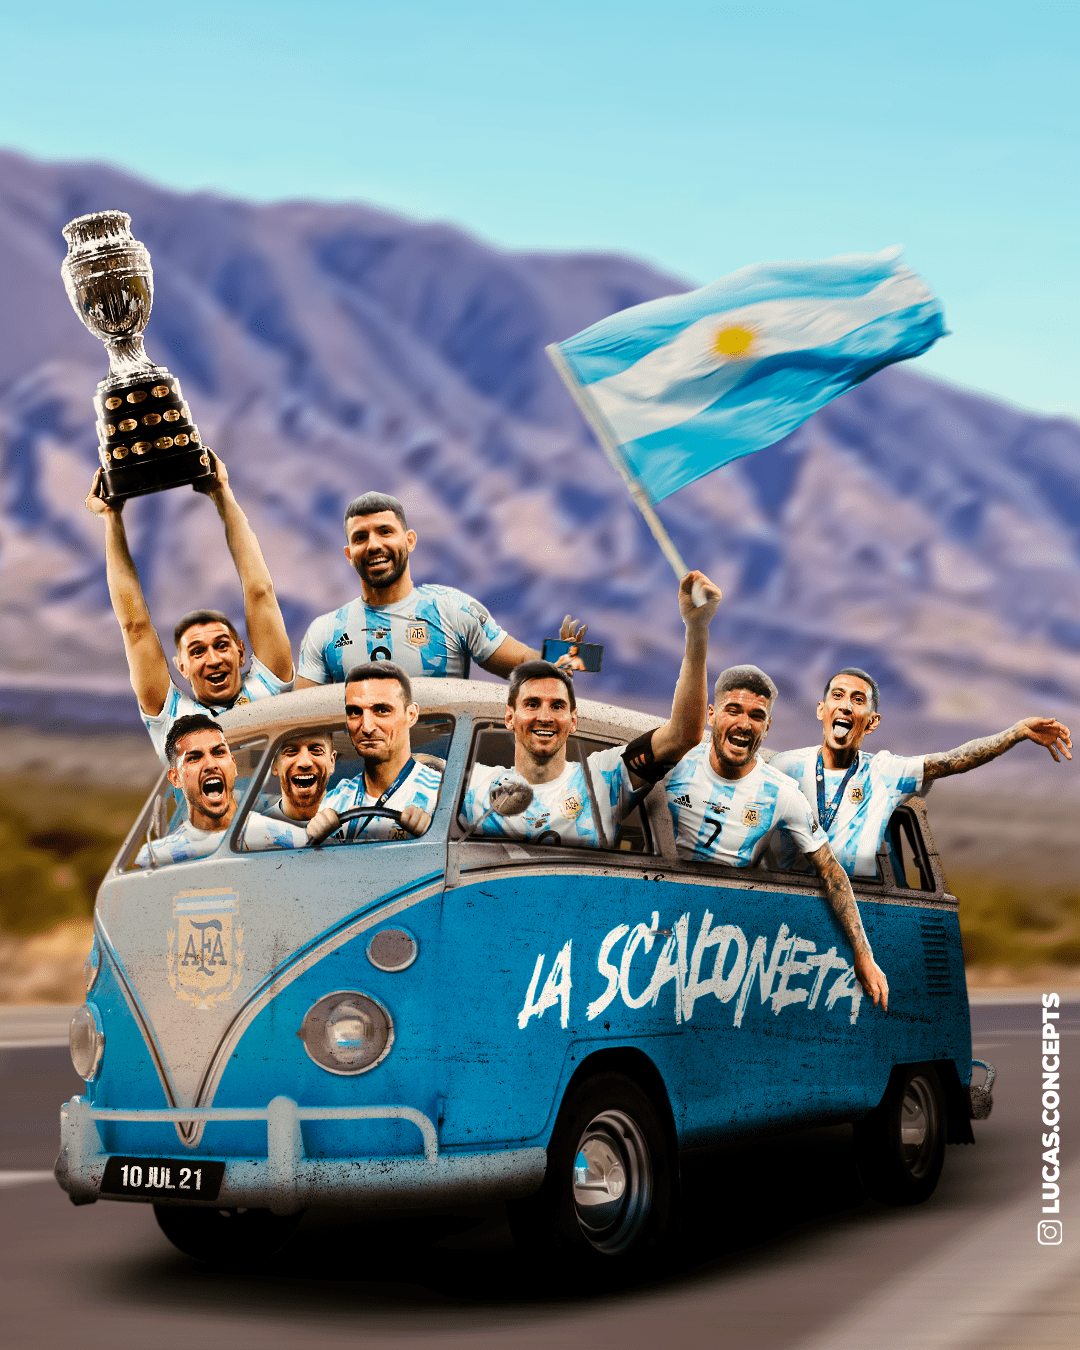 La Scaloneta - Seleccion Argentina on Behance